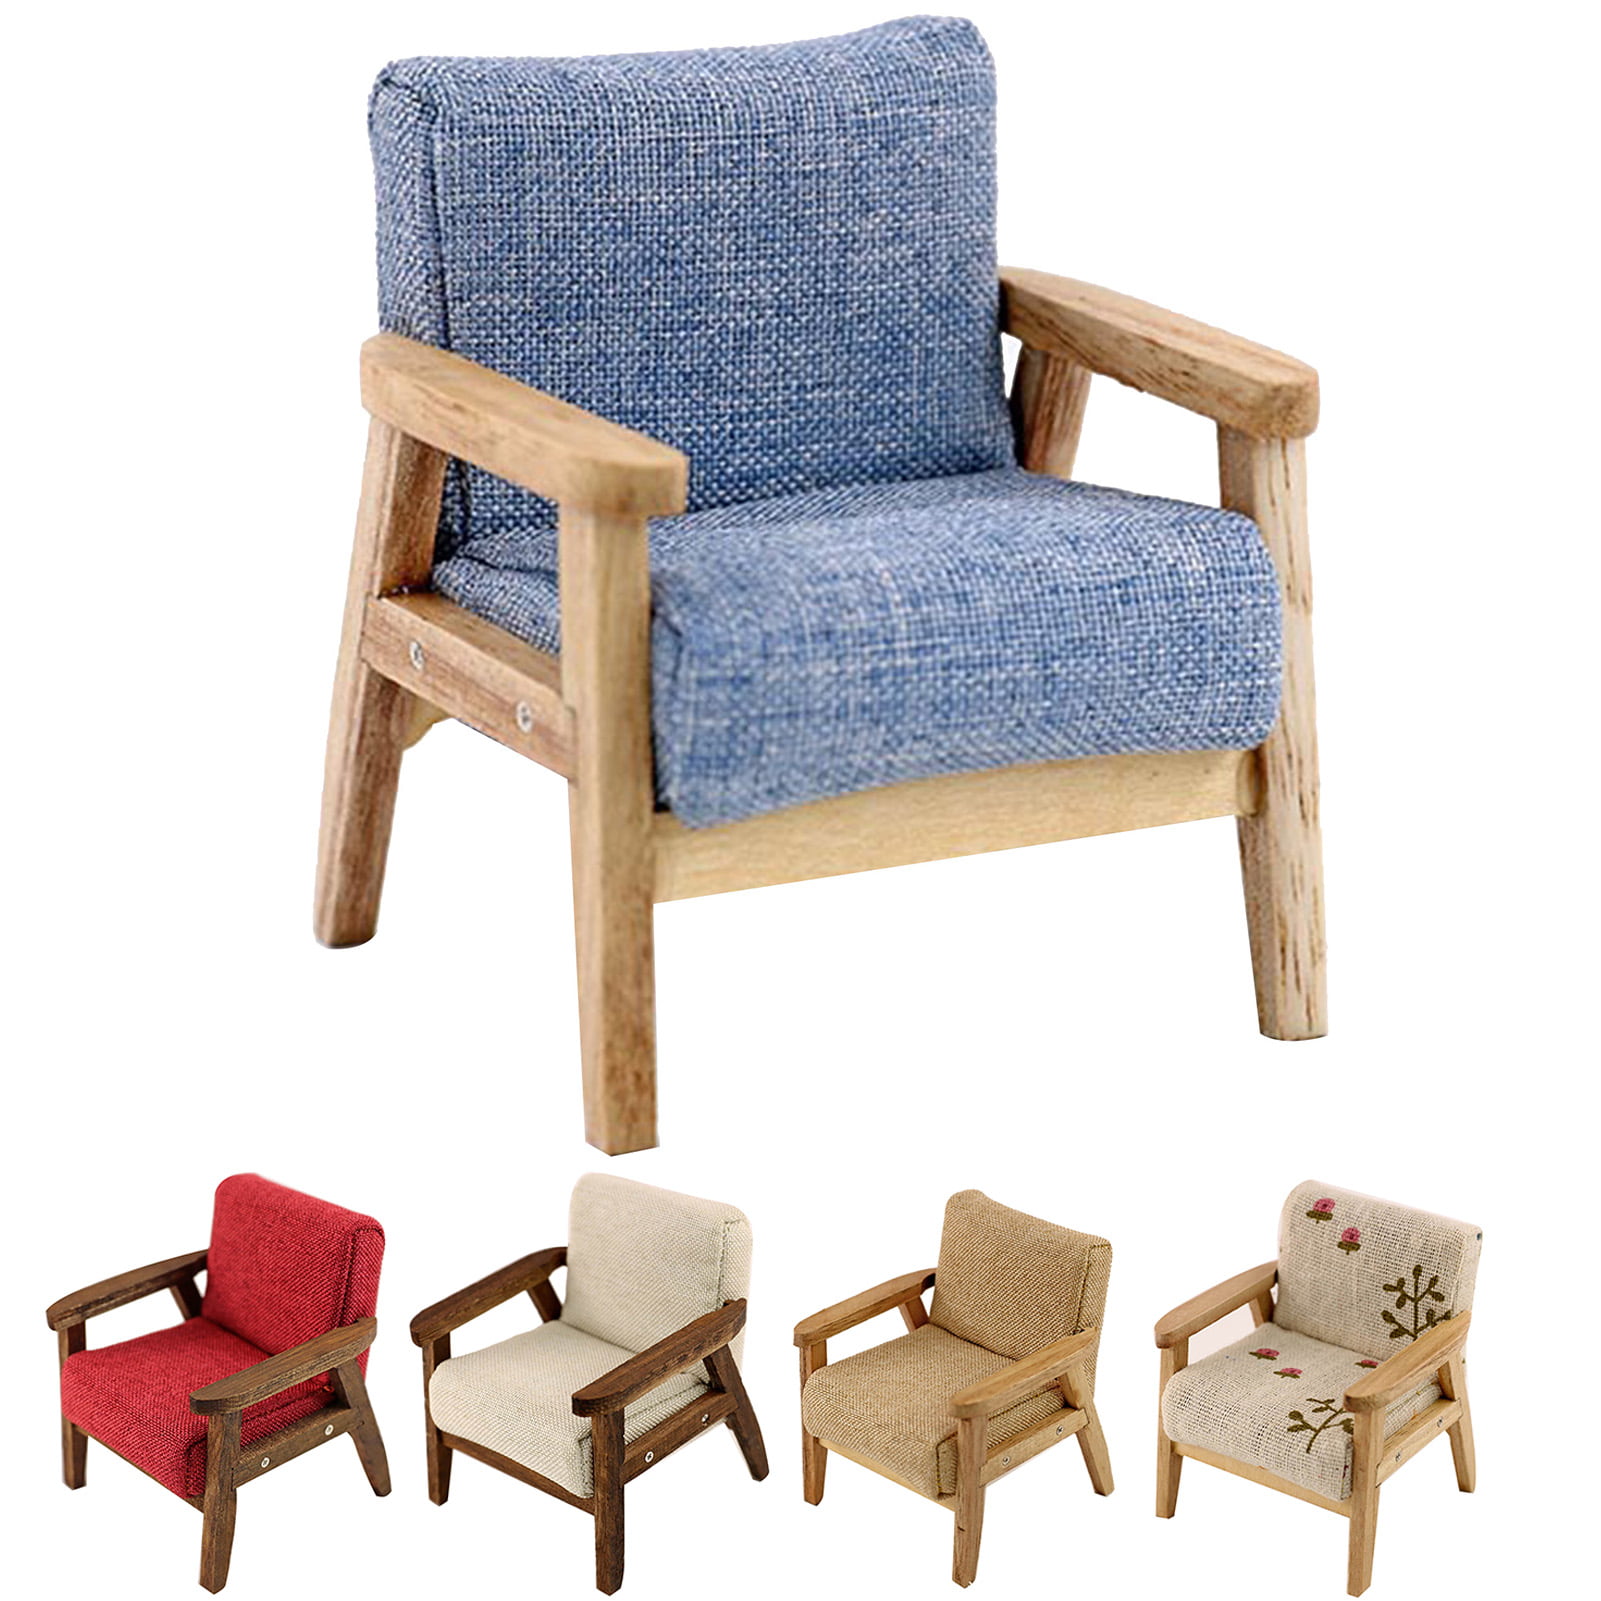 6th Dolls House Miniature Furniture Wood Chair Garden Lawn Lounge Armchair 